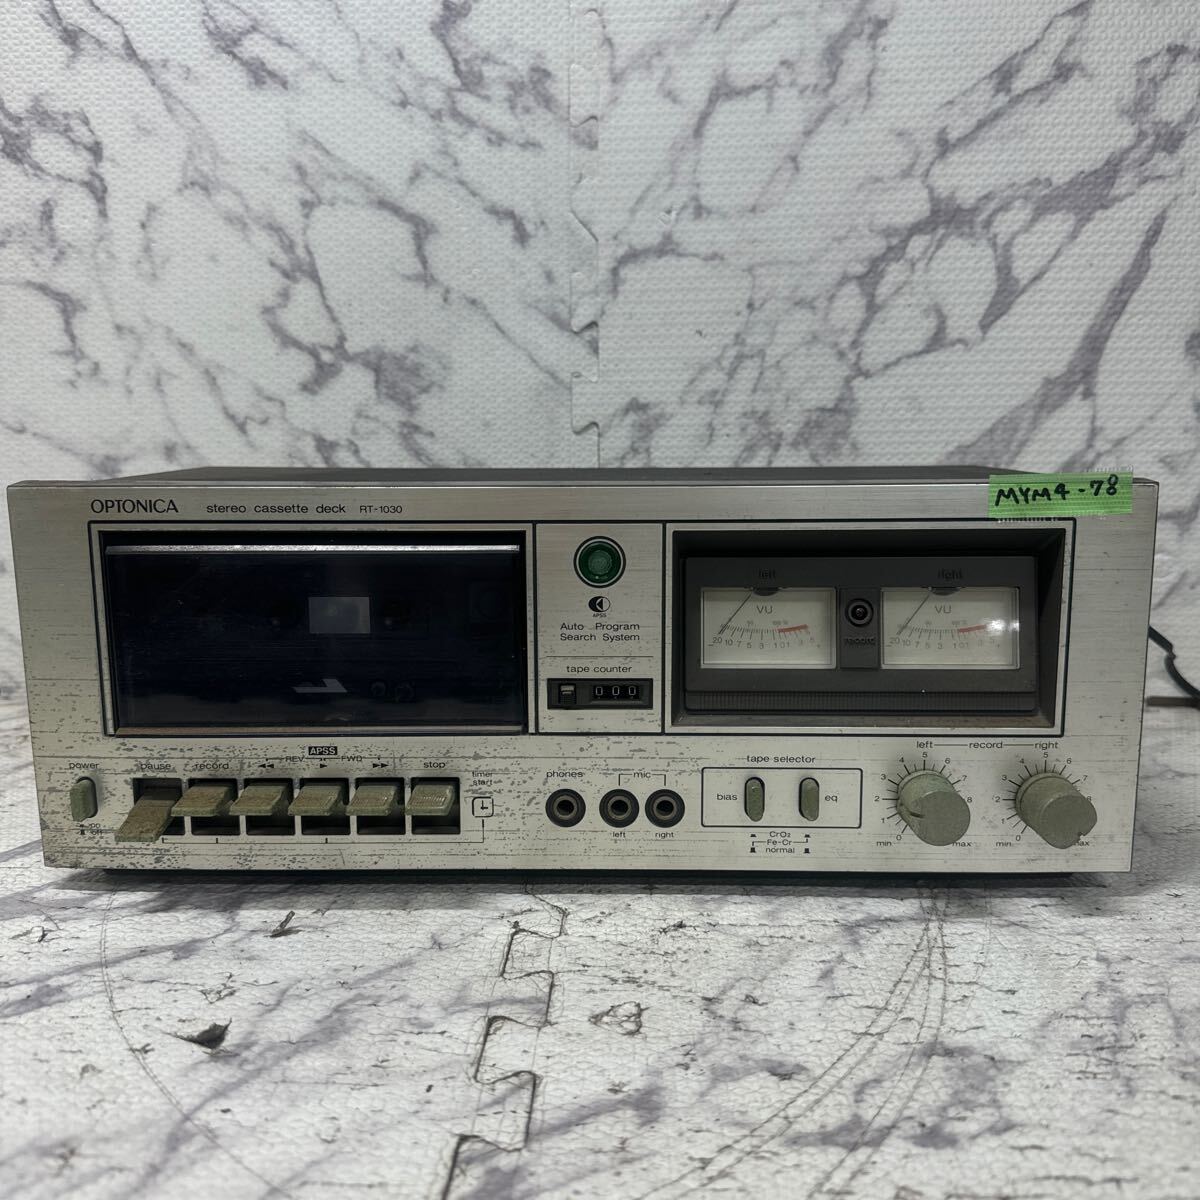 MYM4-78 激安 OPTONICA Stereo Cassette Deck RT-1030 カセットデッキ 通電不可 ジャンク品 ※3回再出品で処分_画像1